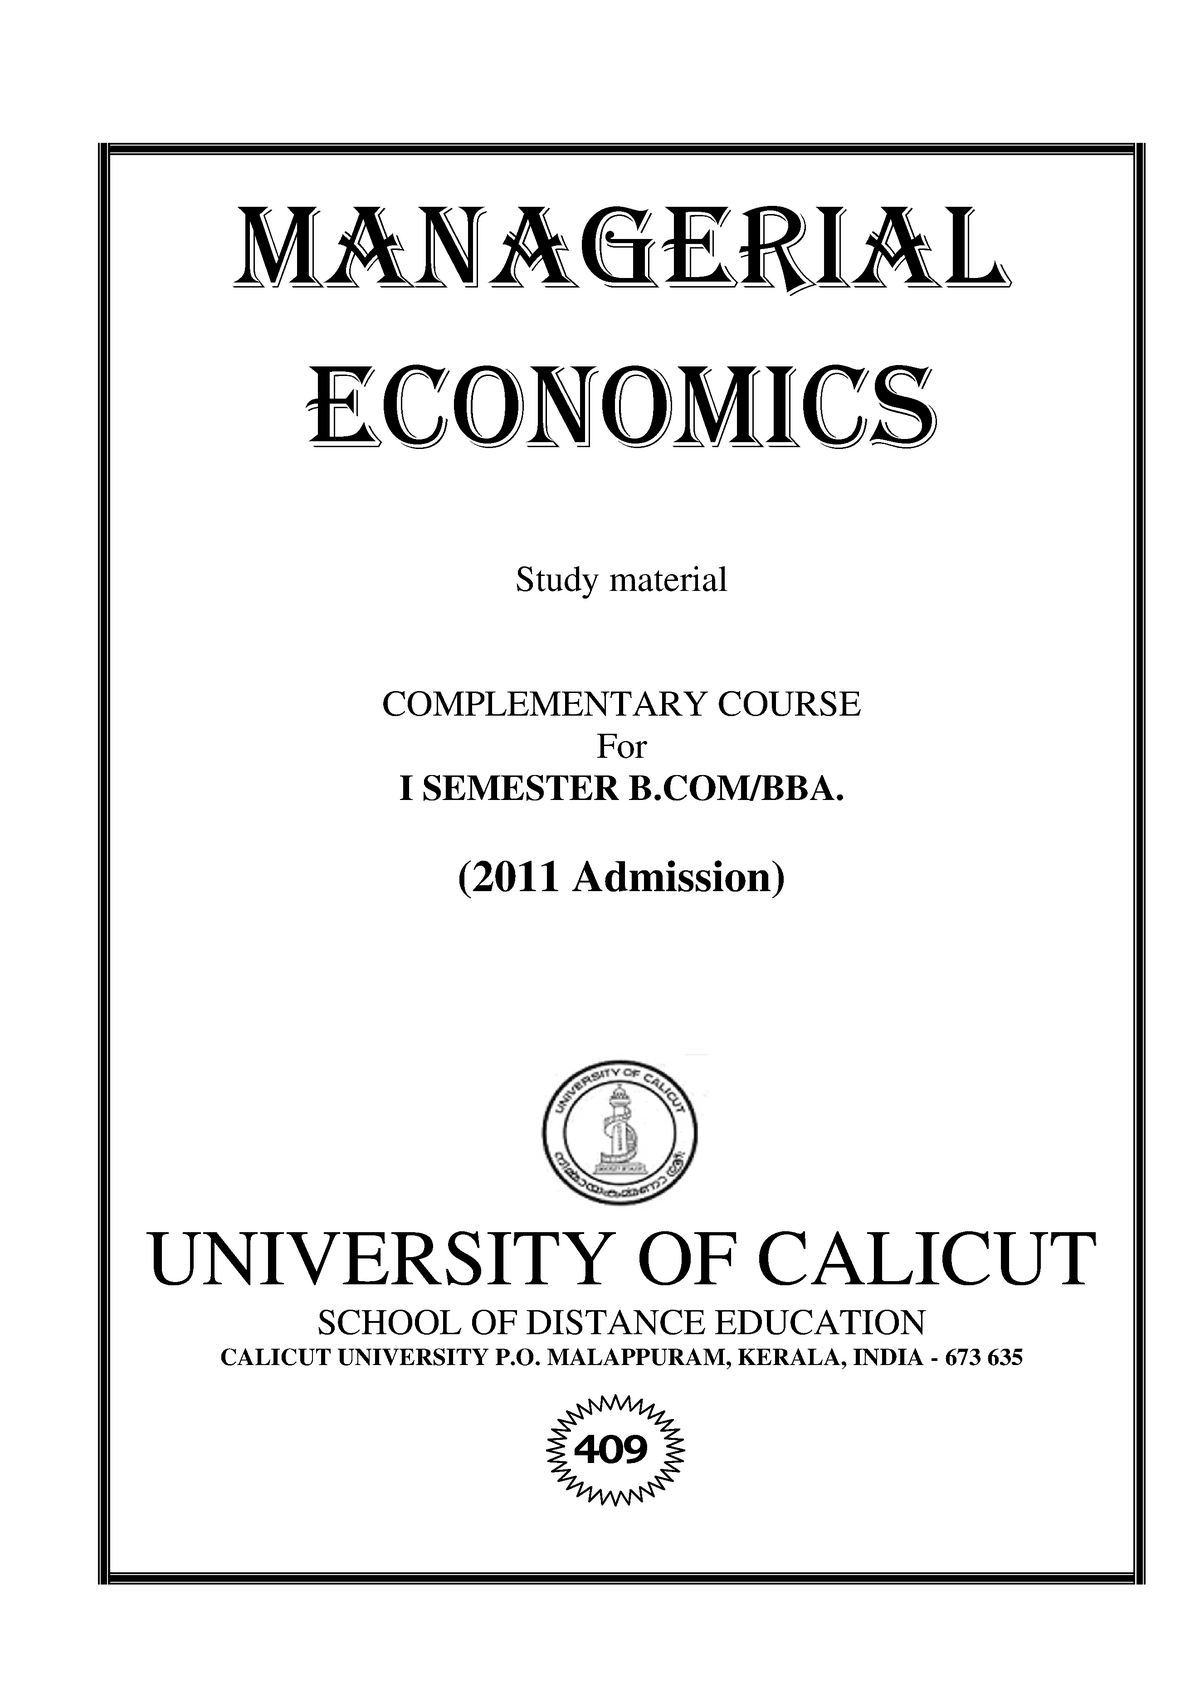 bachelor thesis economics pdf